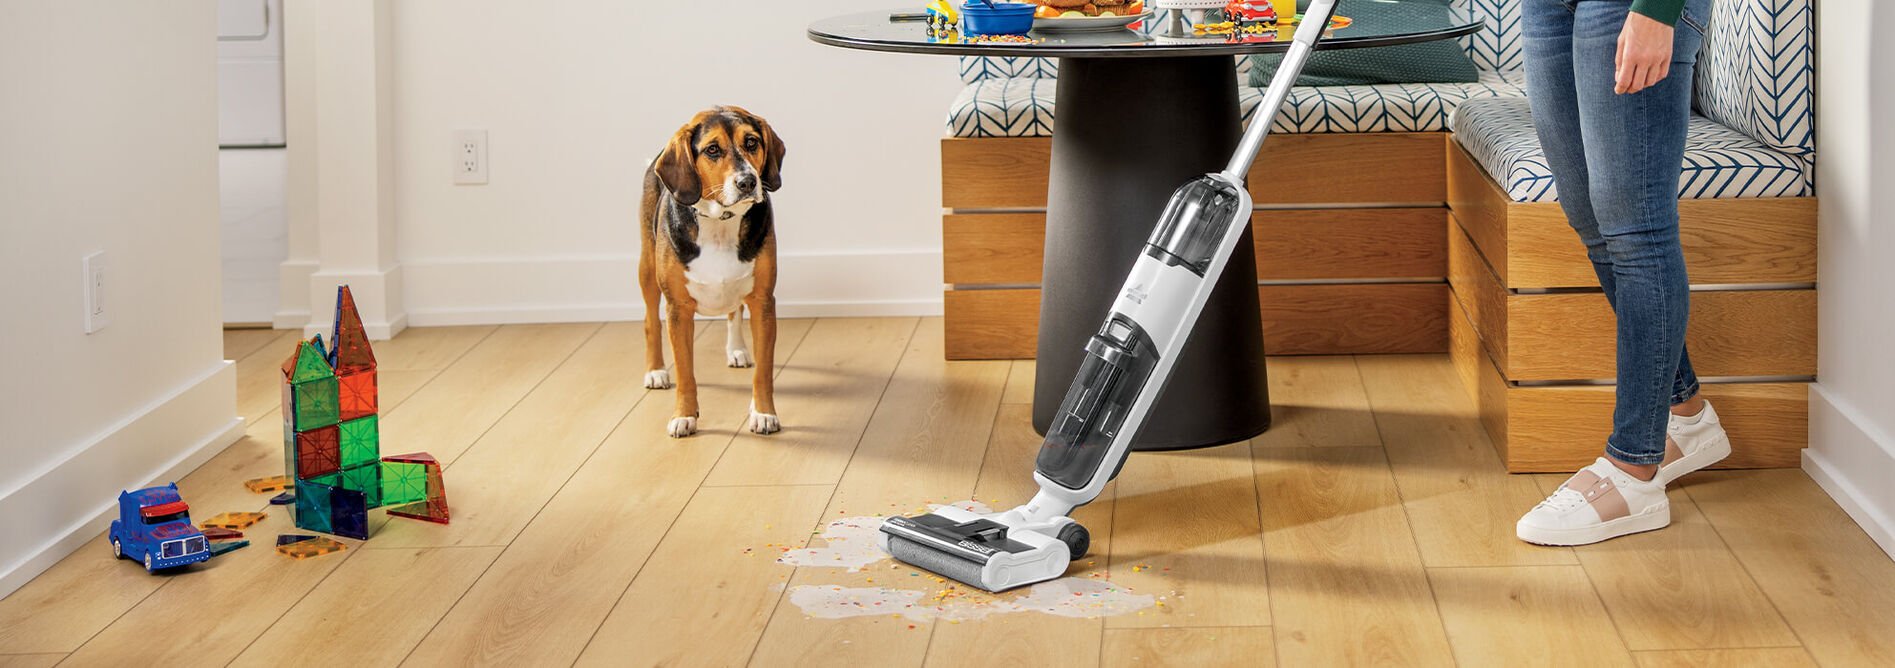 TurboClean™ 3548  BISSELL® Hard Floor Cleaner